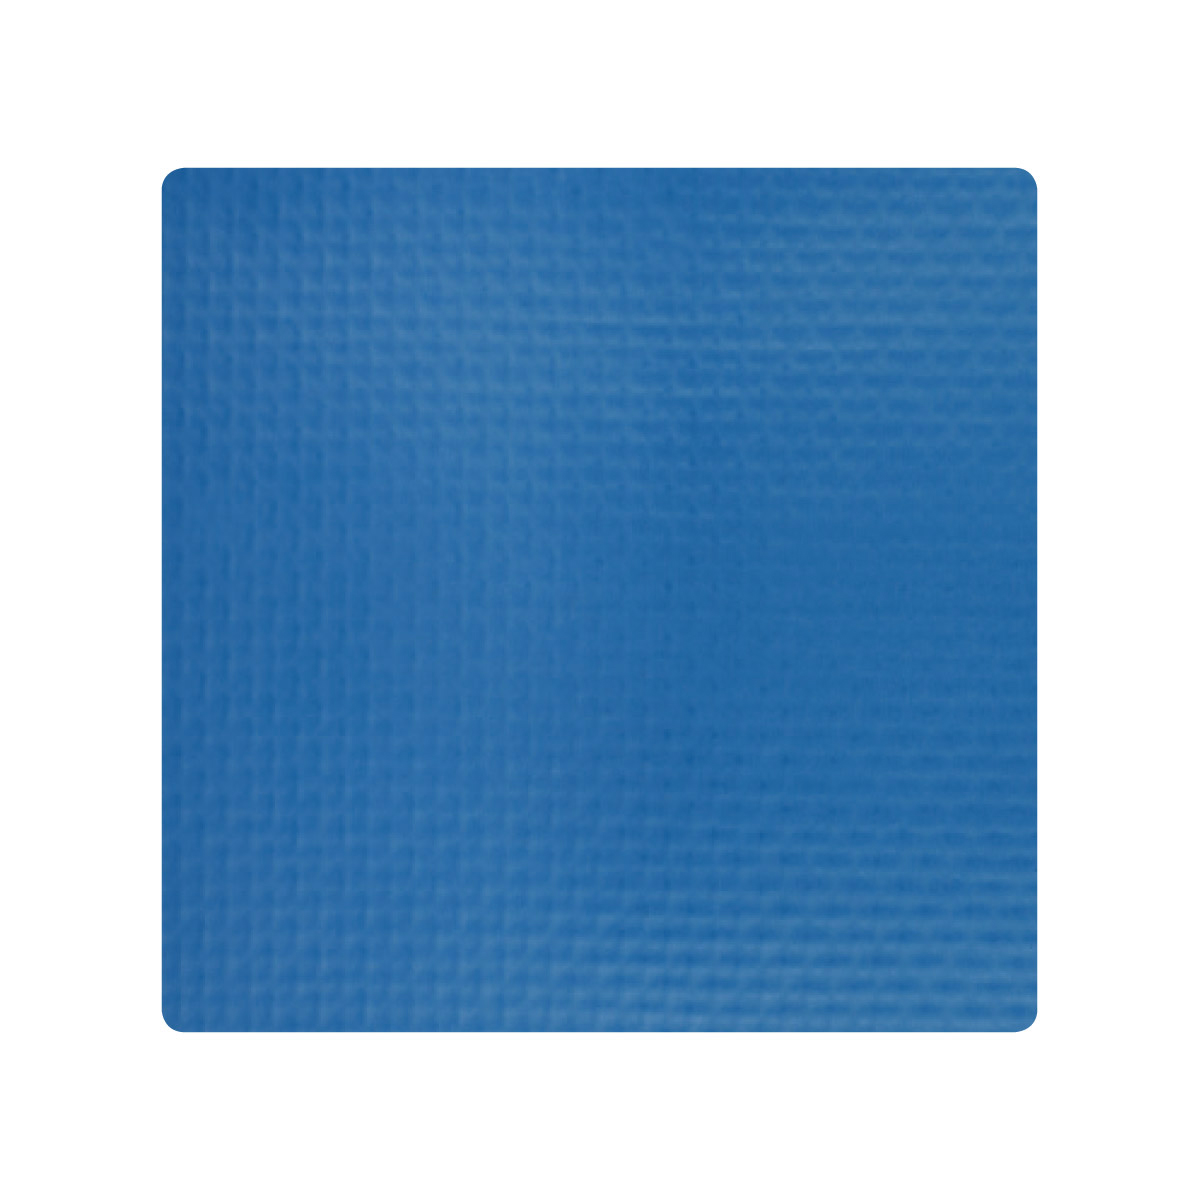 Swimming pool liner antislip fabric reinforced PVC, dark blue 1,5 x 165 cm l=20m Swimming pool liner antislip fabric reinforced PVC, dark blue 1,5 x 165 cm l=20m